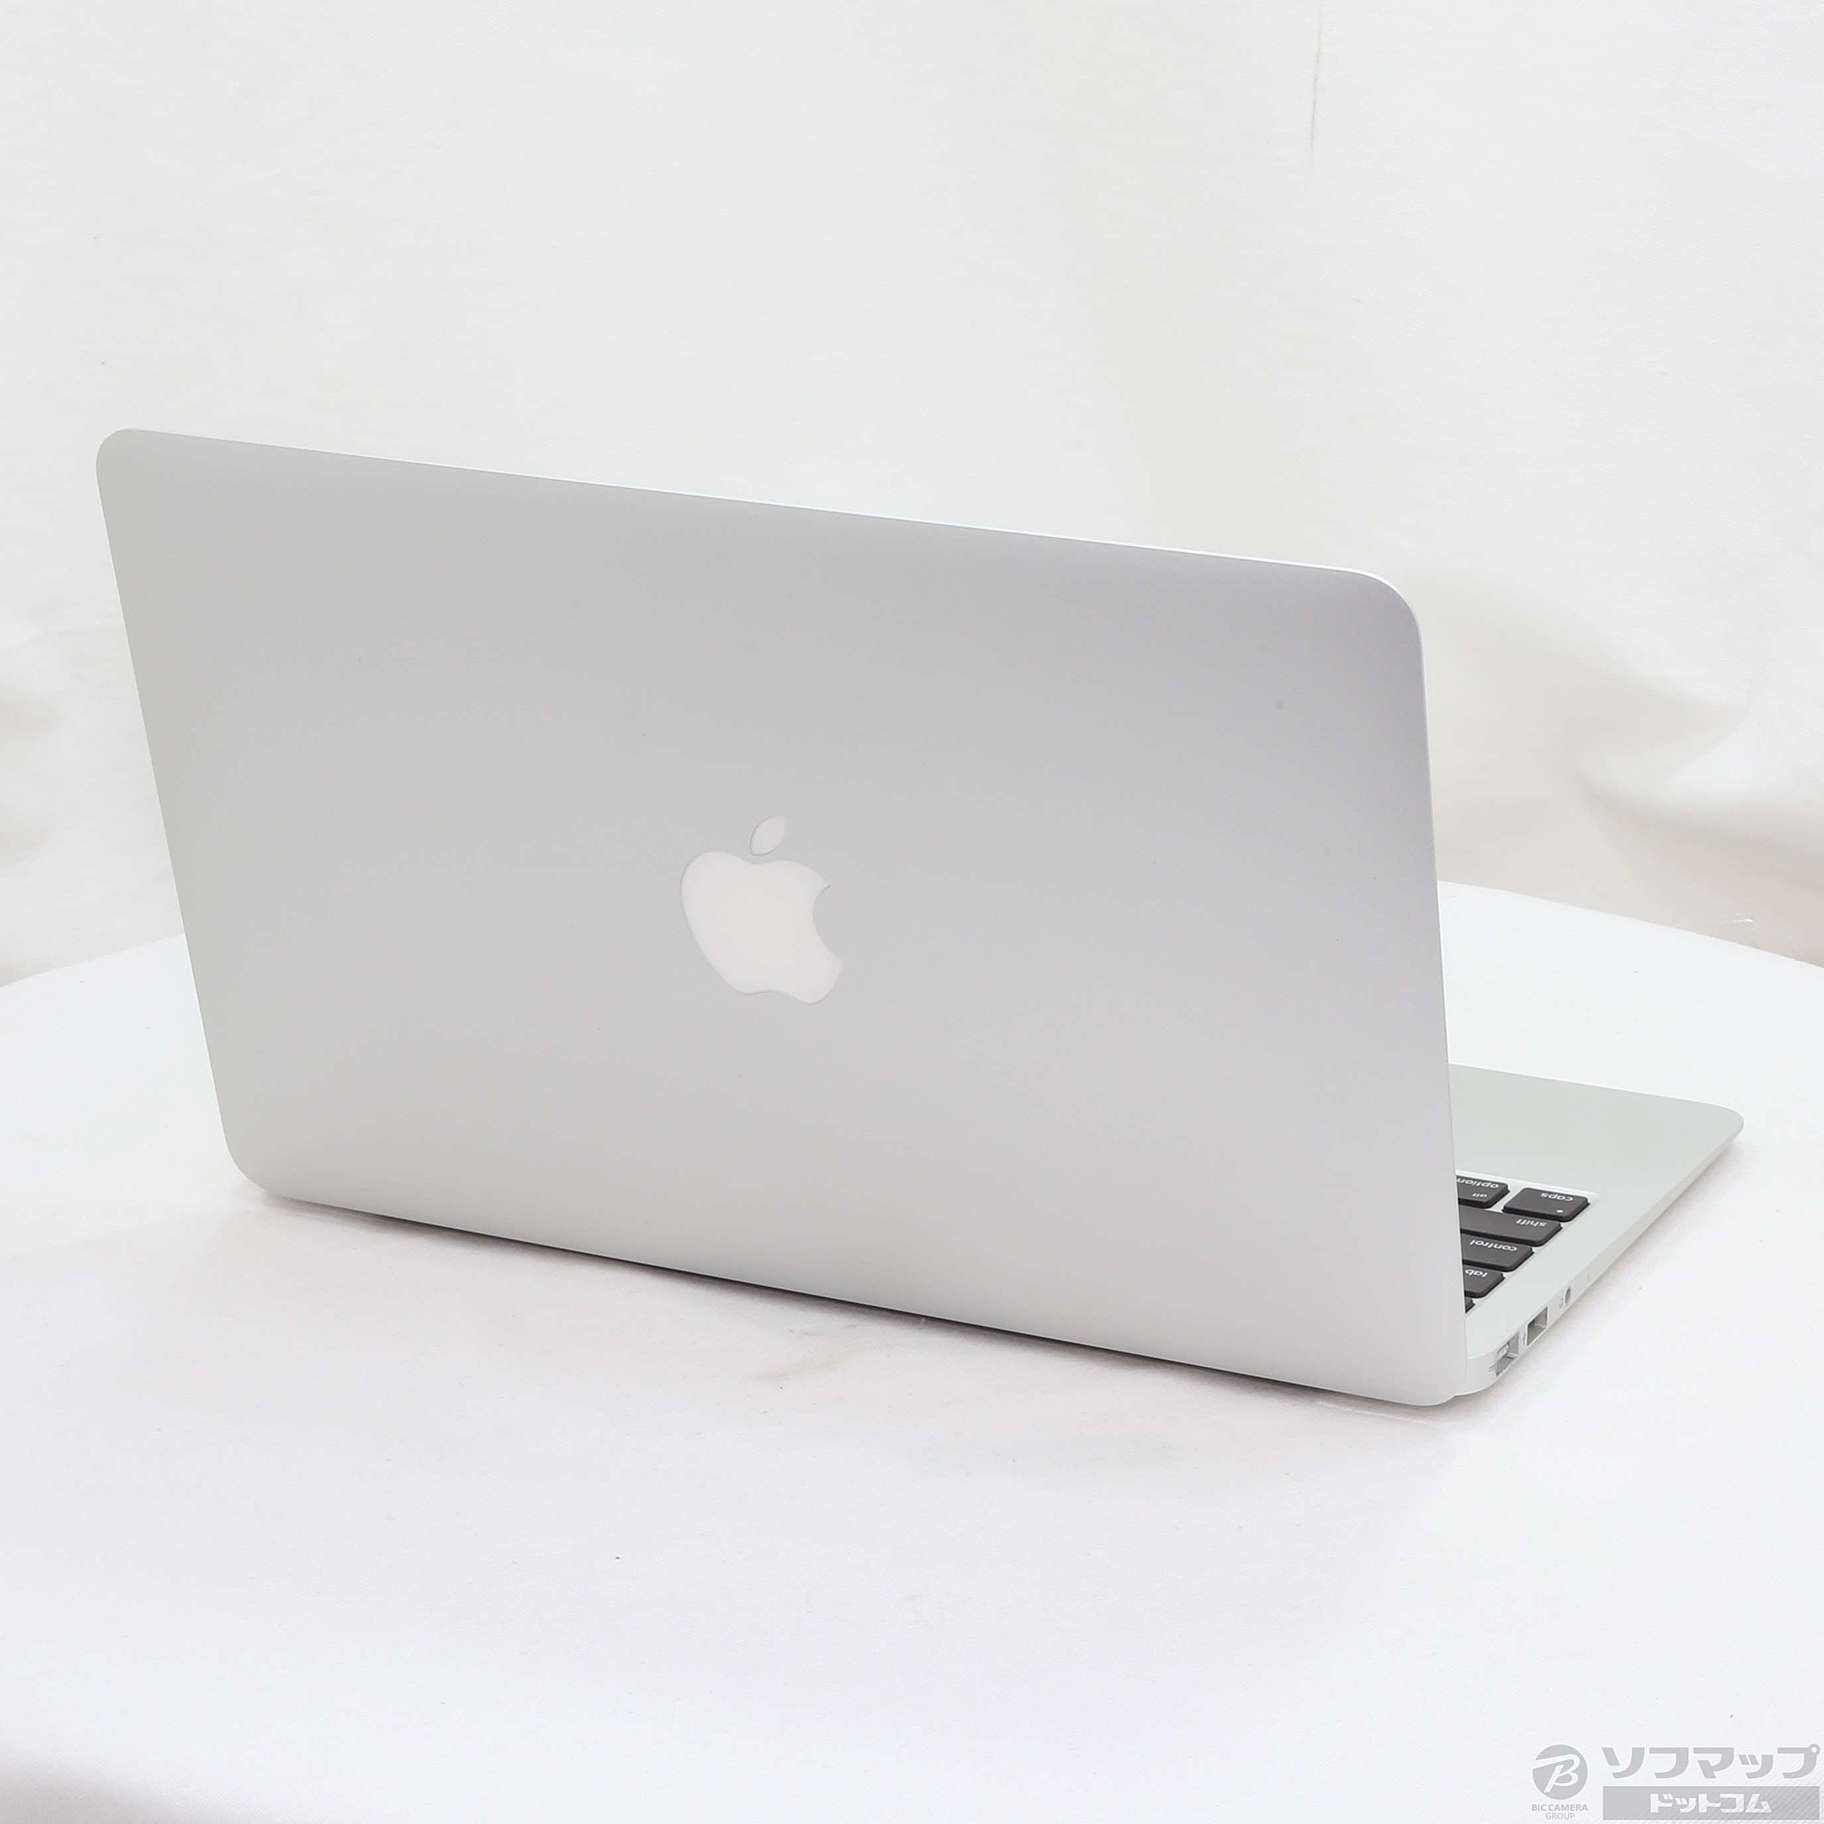 中古】MacBook Air 11.6-inch Mid 2011 MC969J／A Core_i5 1.6GHz 4GB